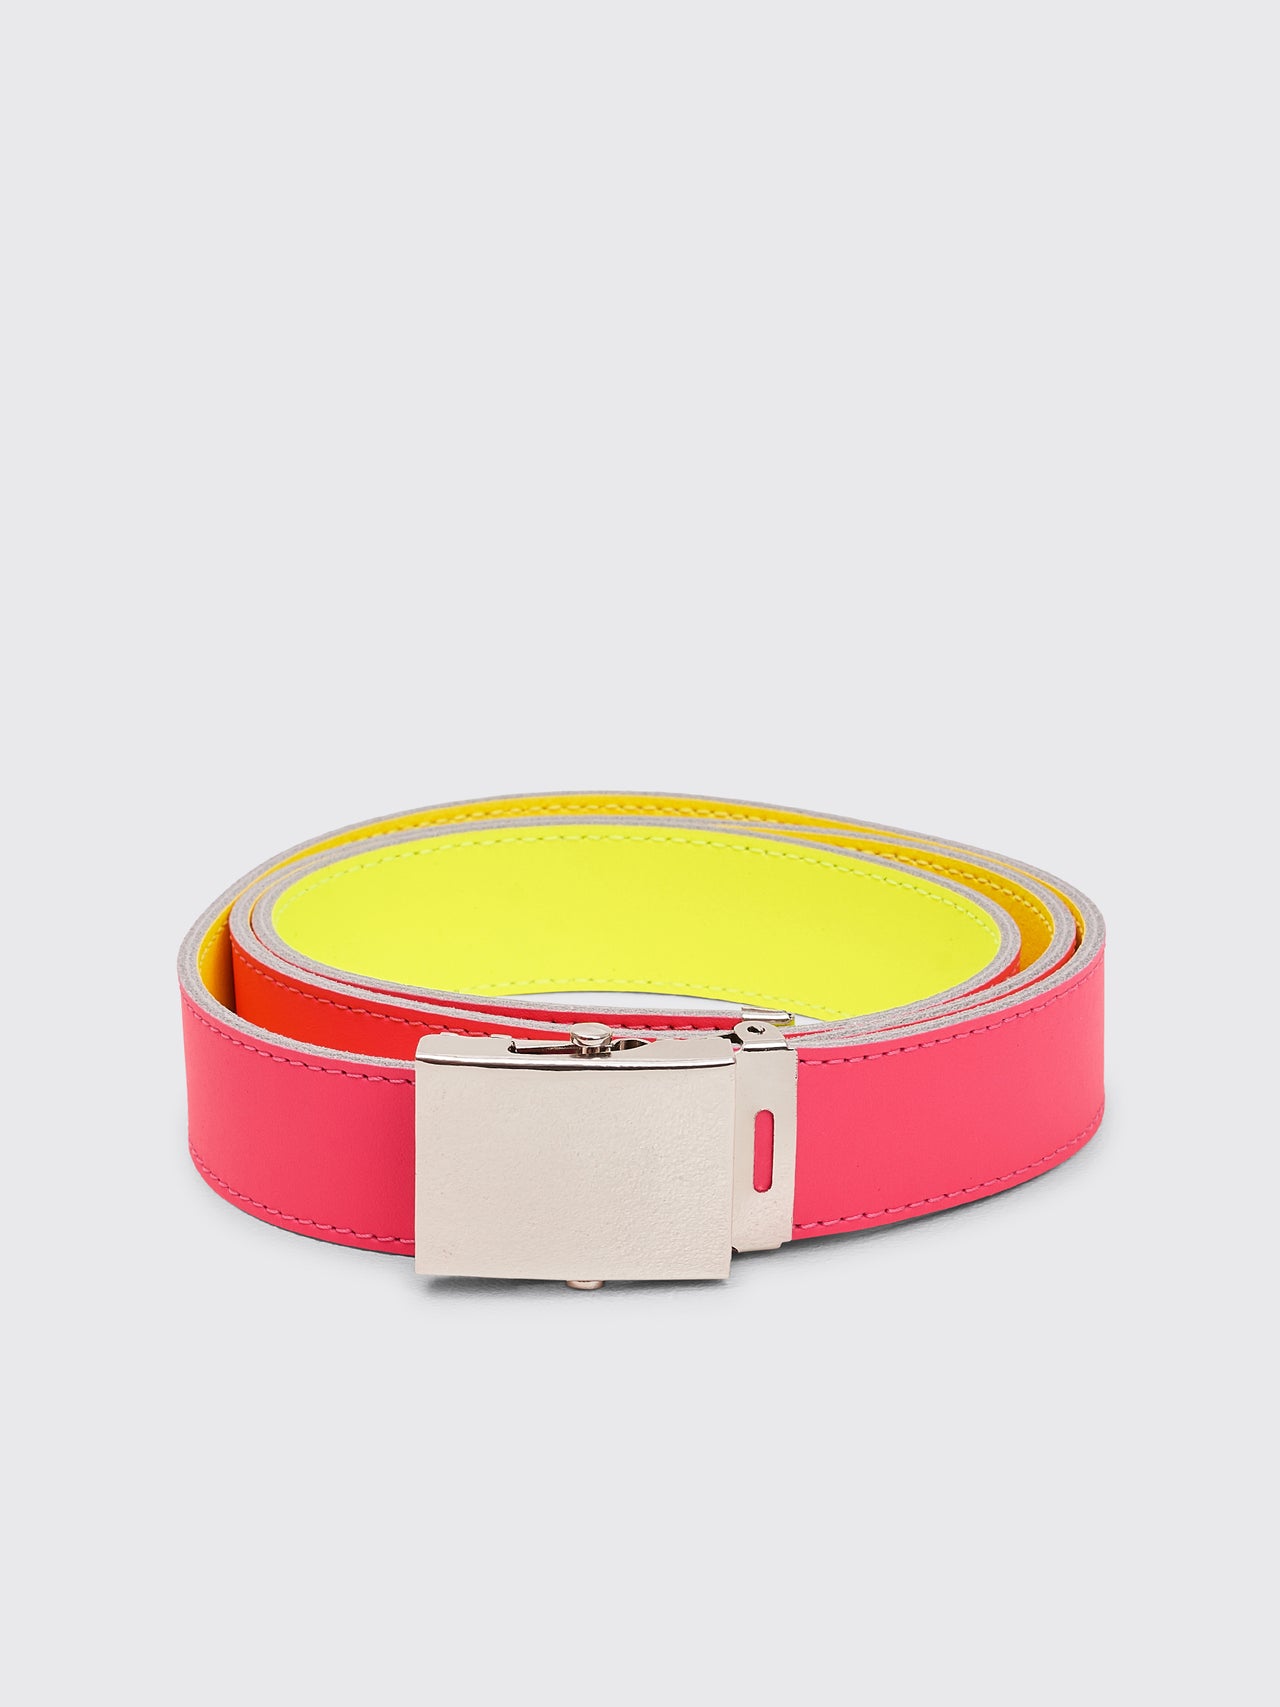 Comme des Garçons Wallet Super Fluo Leather Belt Pink / Yellow